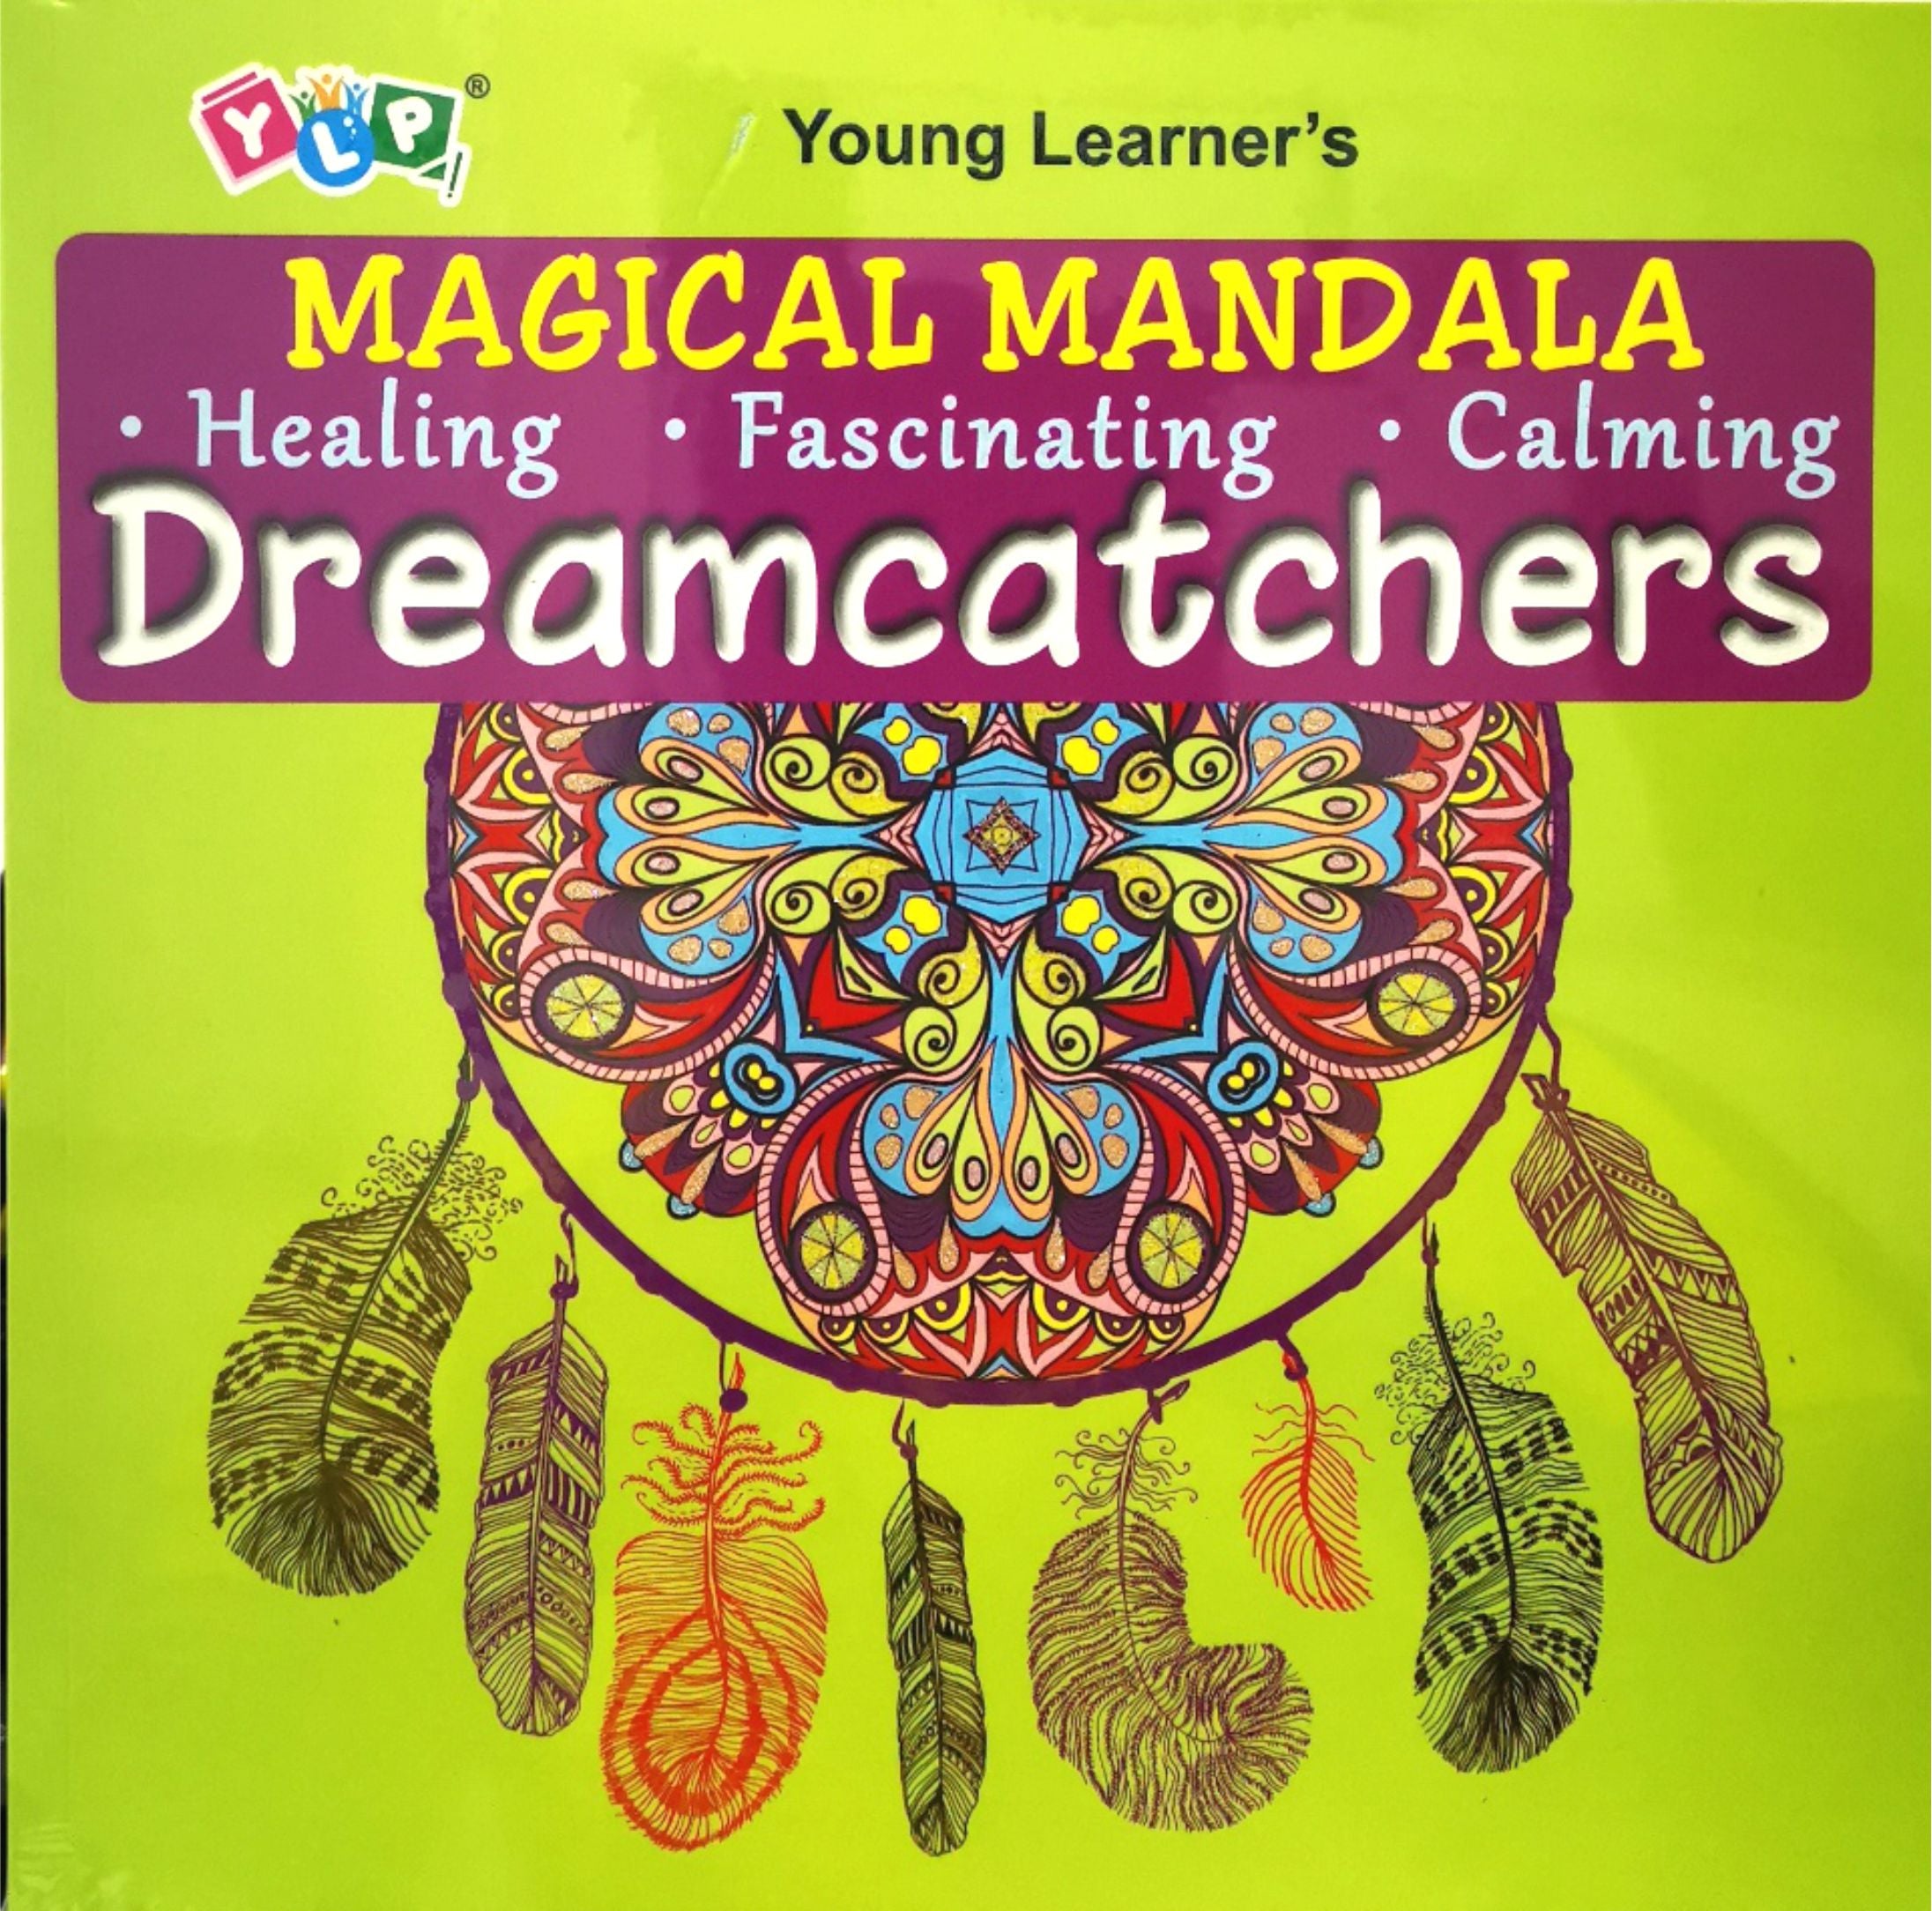 Young Learner's Magical Mandala (Dreamcatchers)